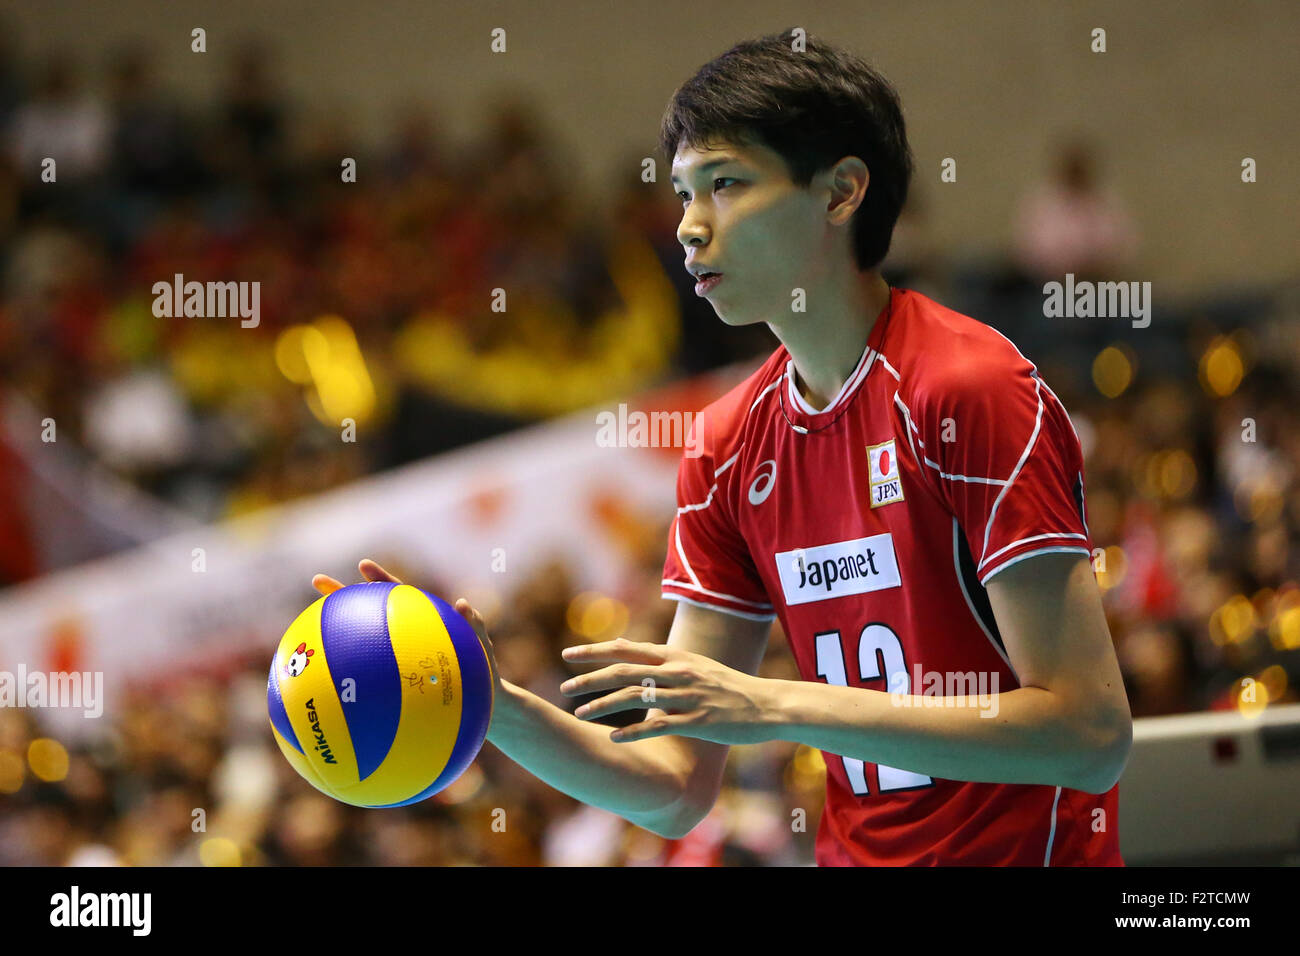 Akihiro yamauchi volleyball hi-res stock photography and images - Alamy